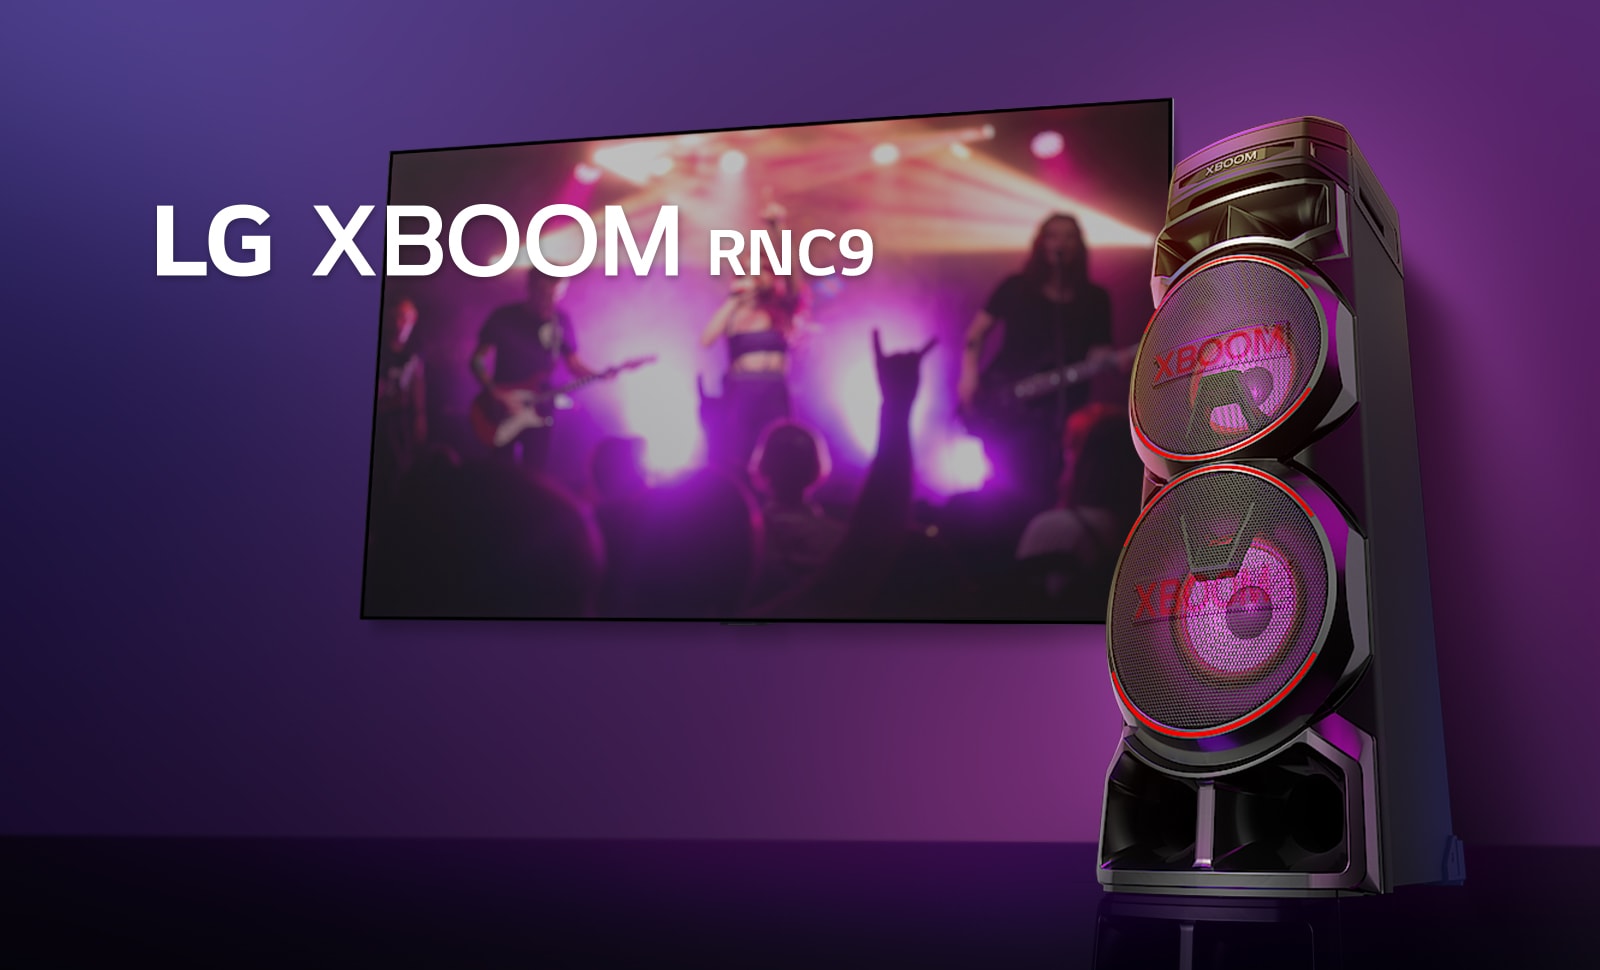 Prikaz desne strane LG XBOOM RNC9 pod oštrim uglom na ljubičastoj pozadini. Osvetljenje zvučnika XBOOM takođe je ljubičasto. Na TV ekranu se prikazuje scena koncerta.